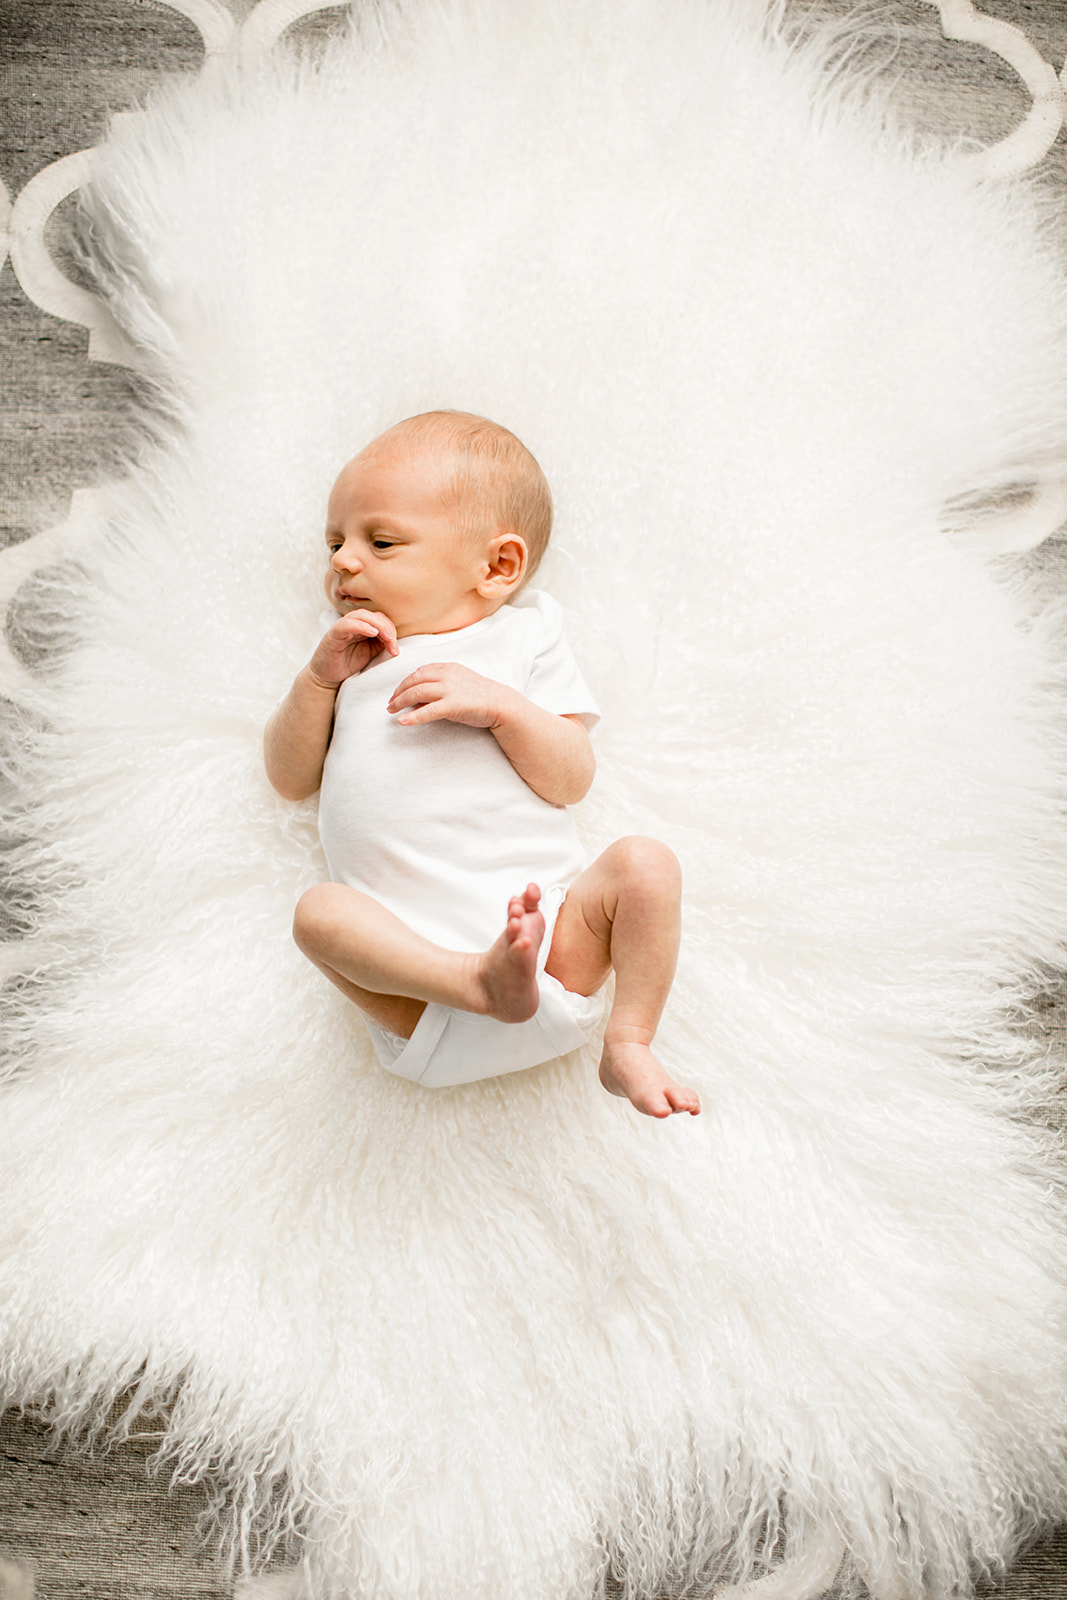 Baby Boy Rowans Lifestyle Newborn Shoot - Image Property of www.j-dphoto.com